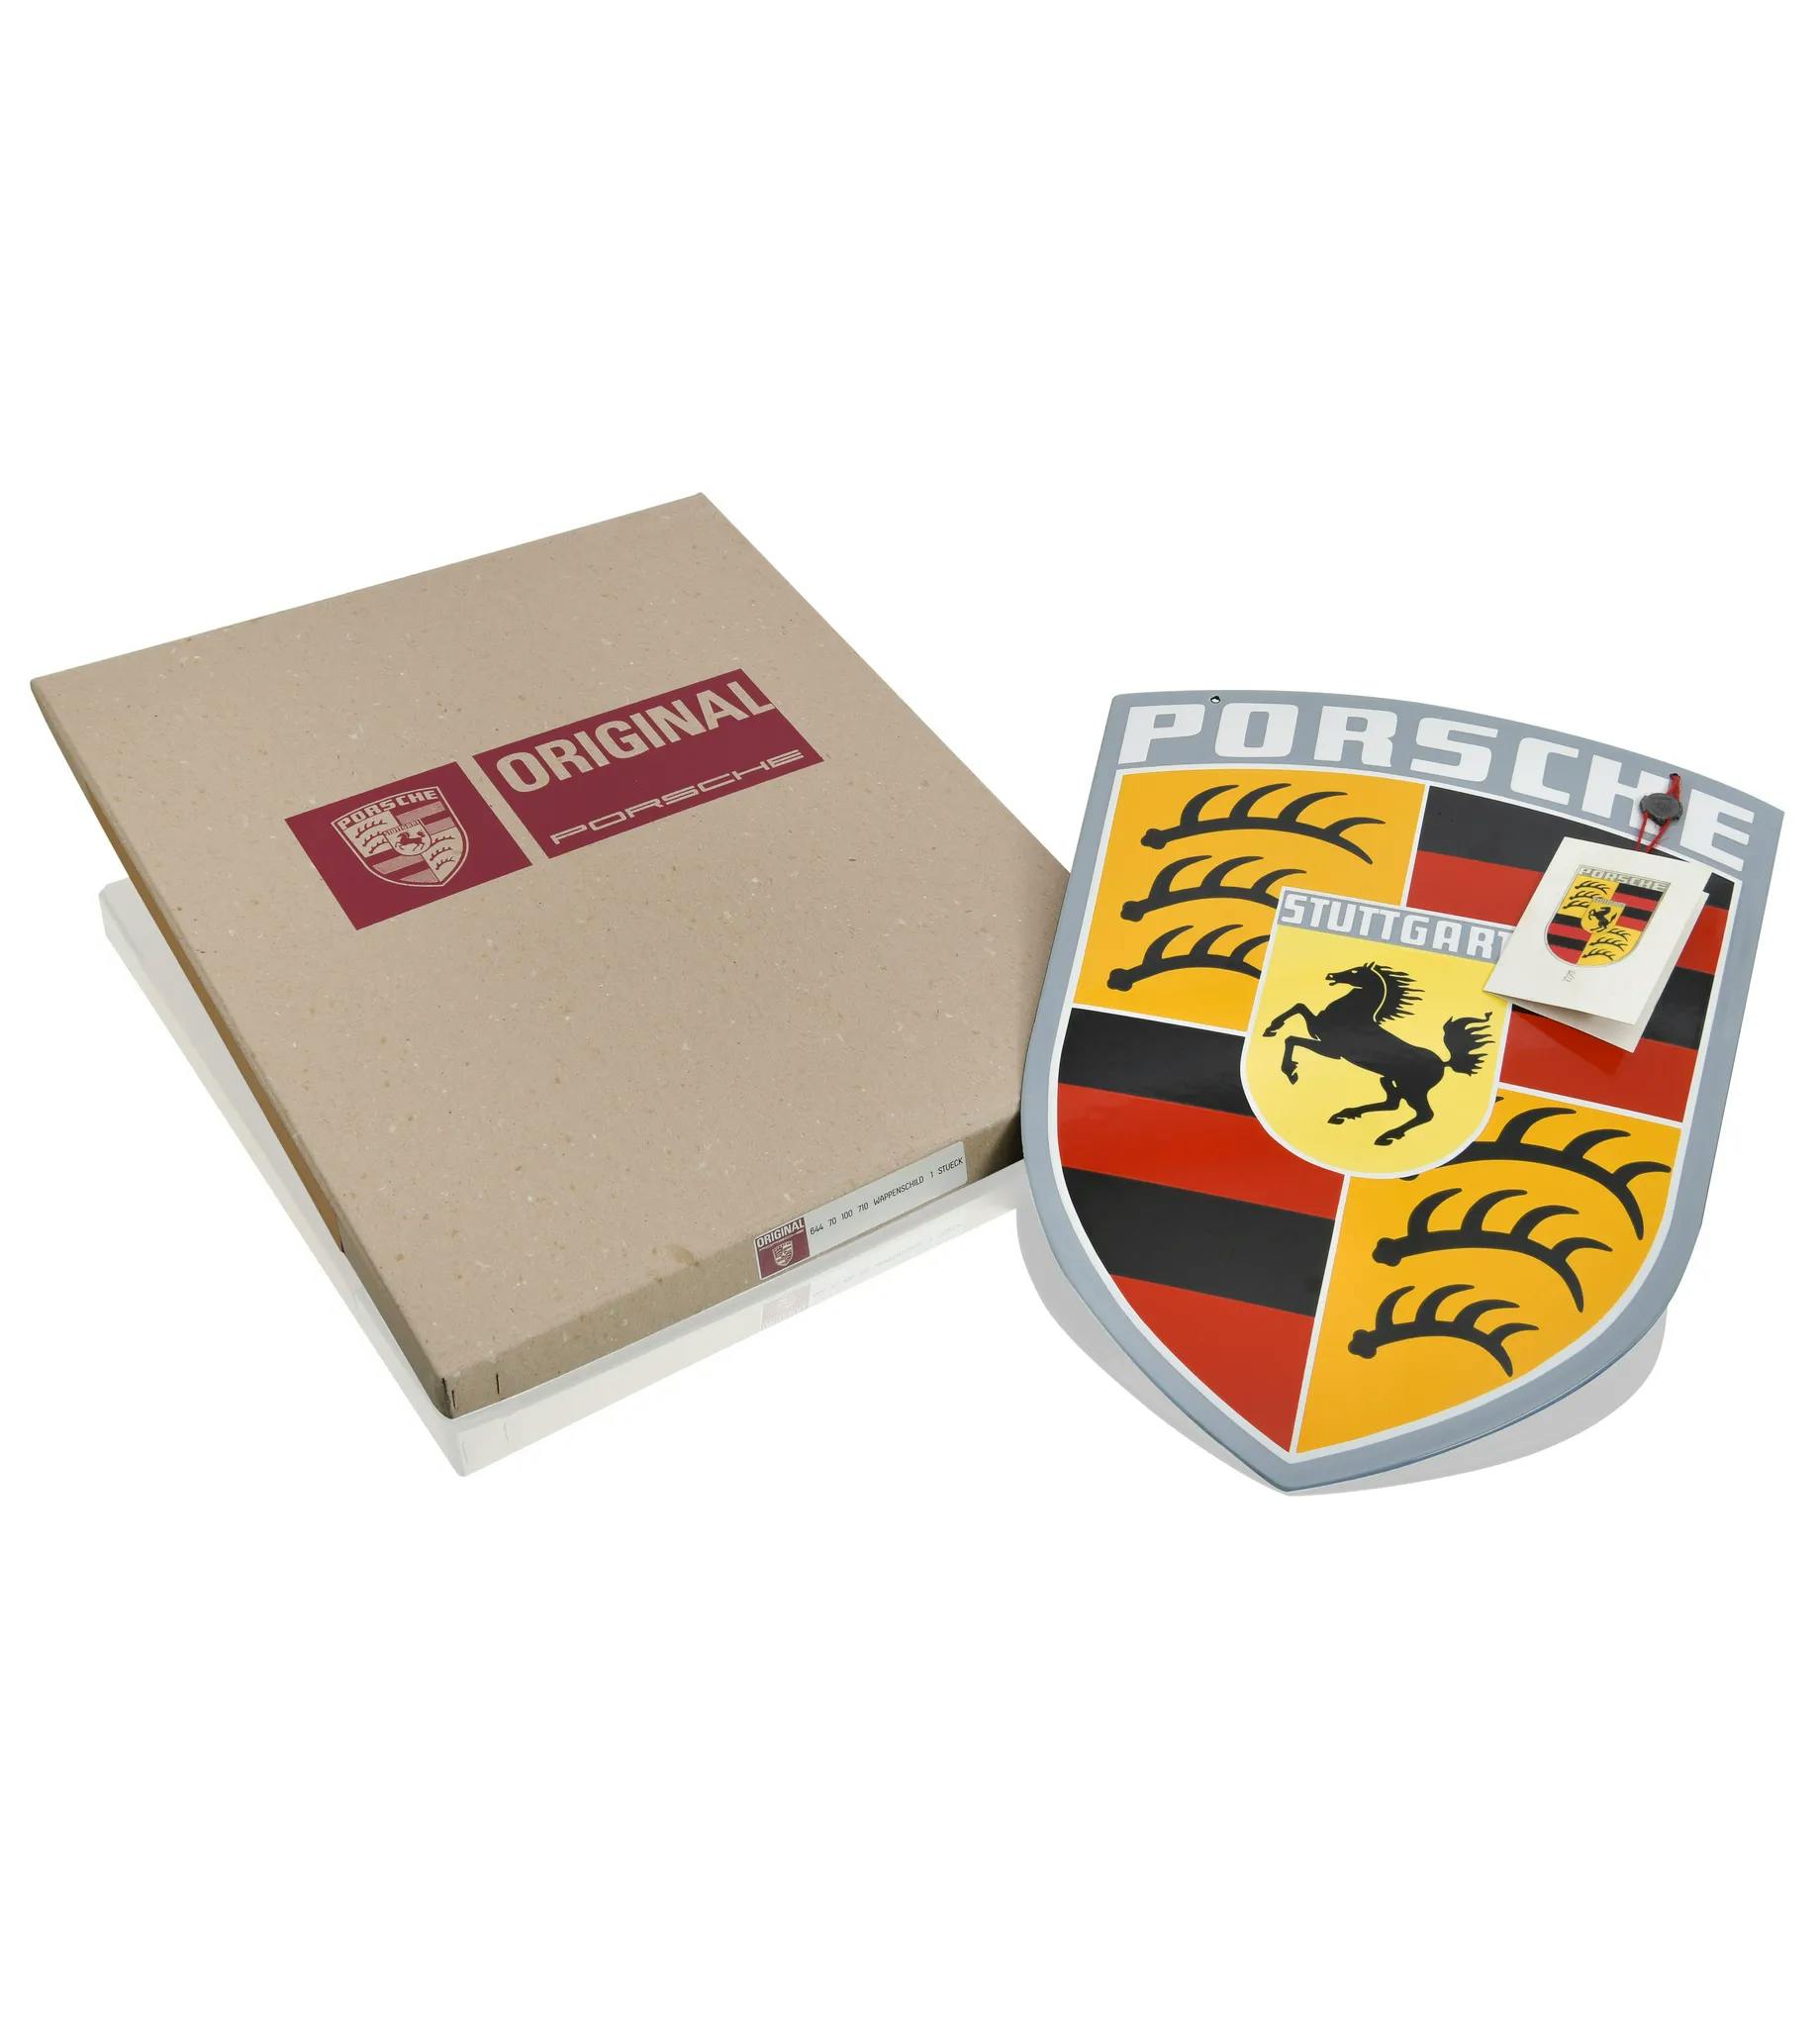 Enamel plate - Porsche Crest 1